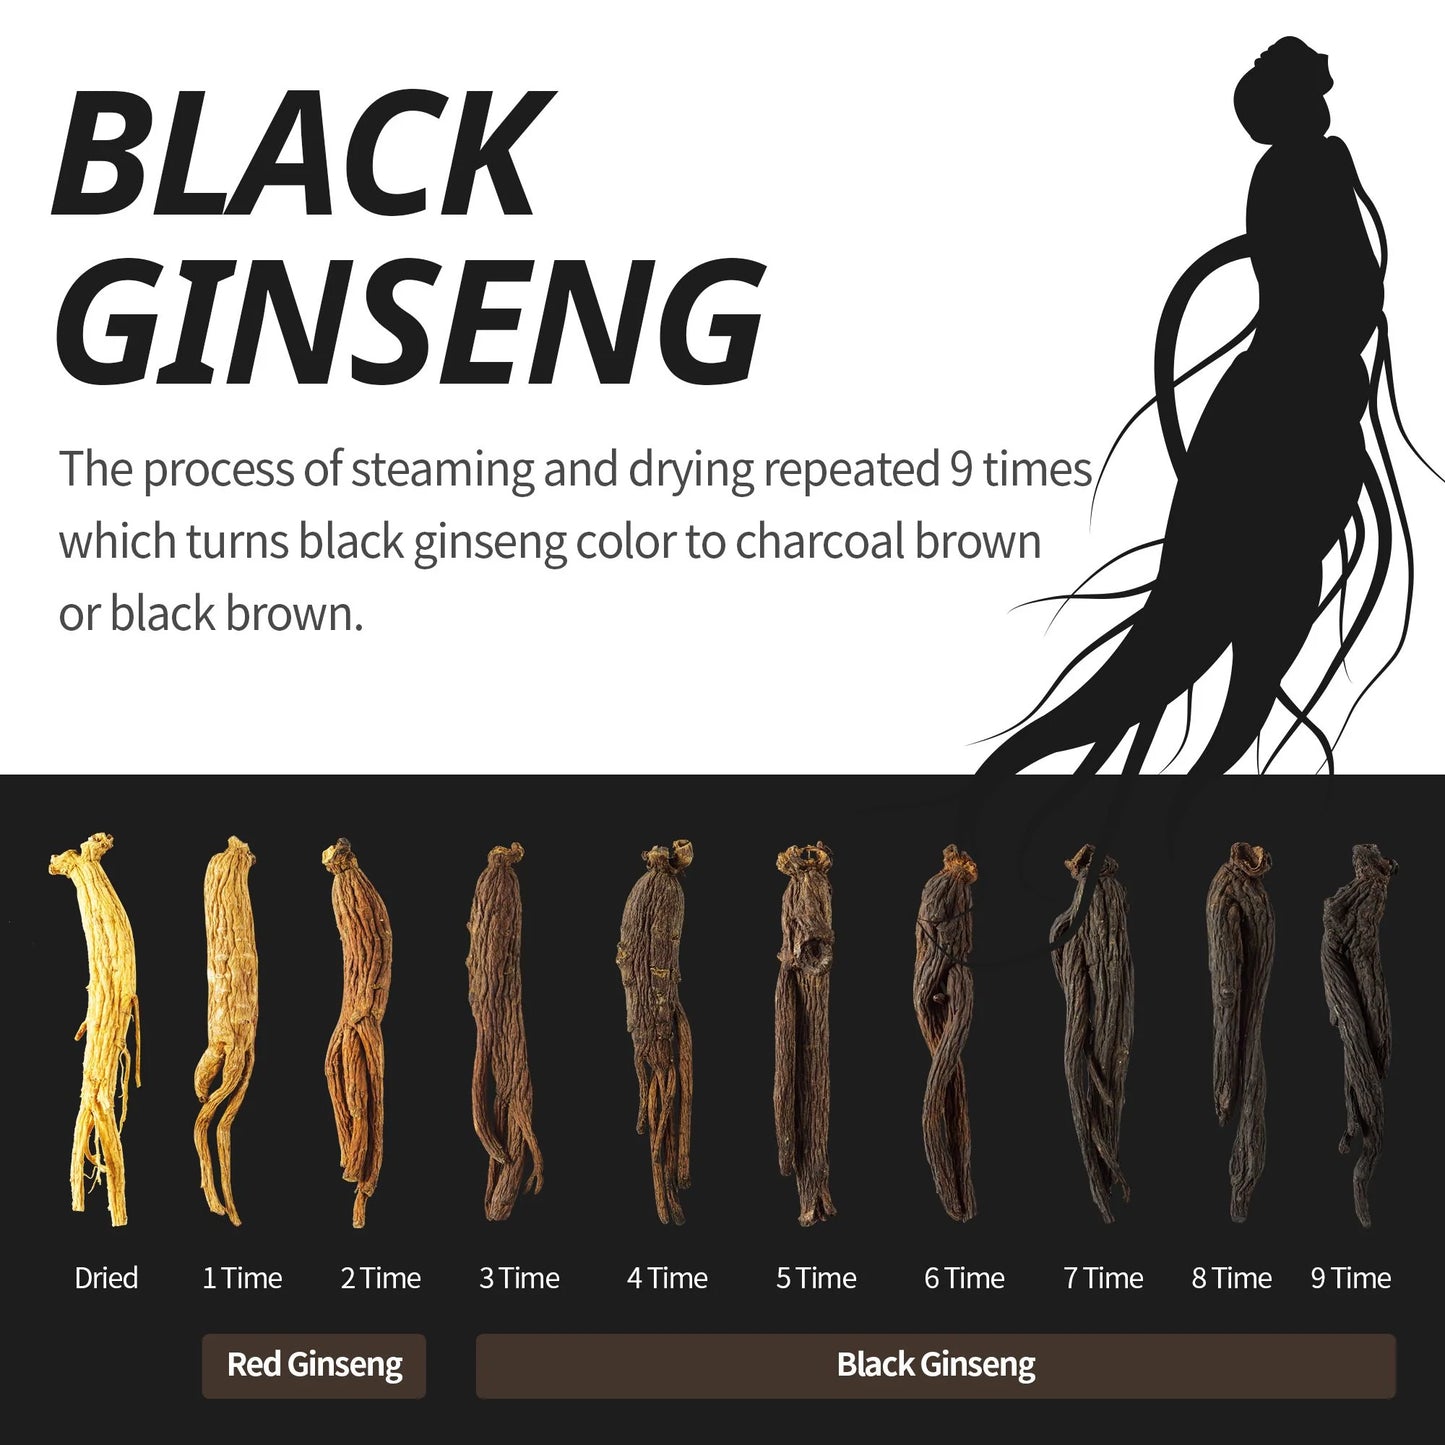 GINZAI Ginseng Shampoo | 500ml